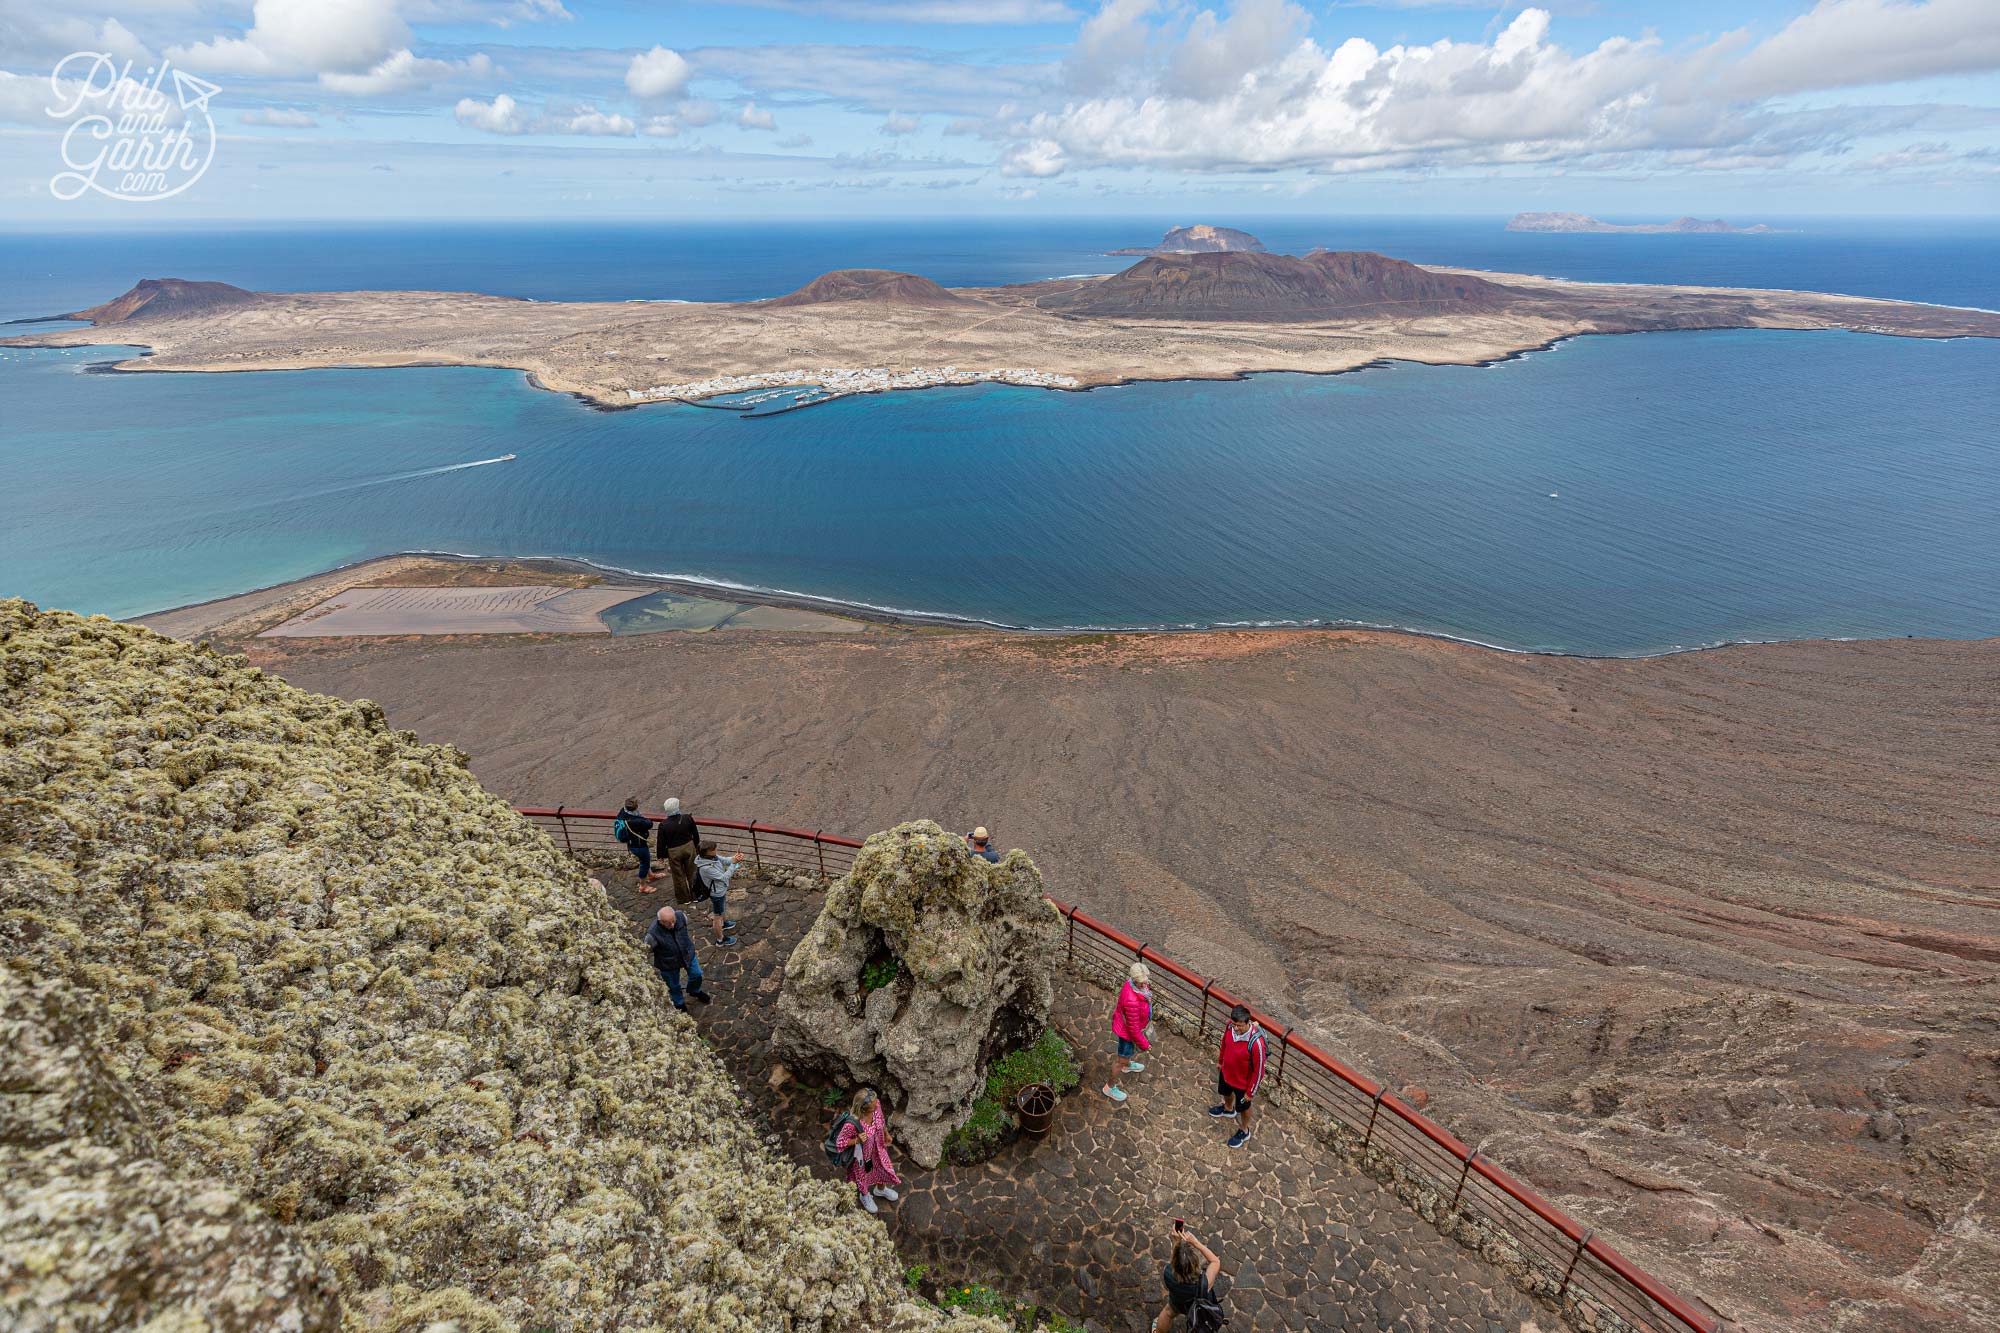 Views across to the 8th Canary Island La Graciosa and the Chinijo Islands National Park